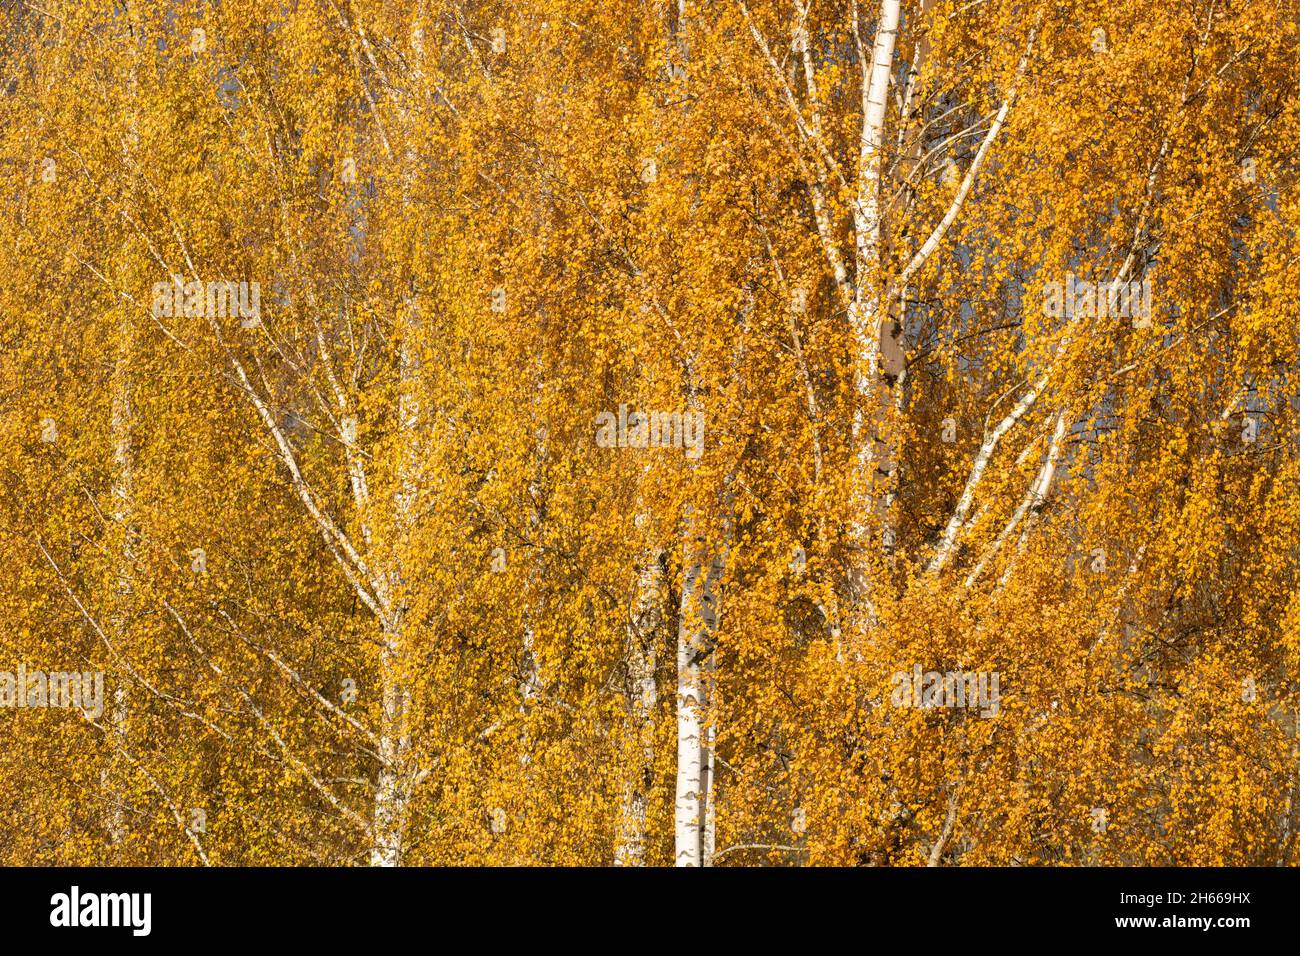 Lush Silver birch, Betula pendula trees during autumn foliage in Estonia. Stock Photo